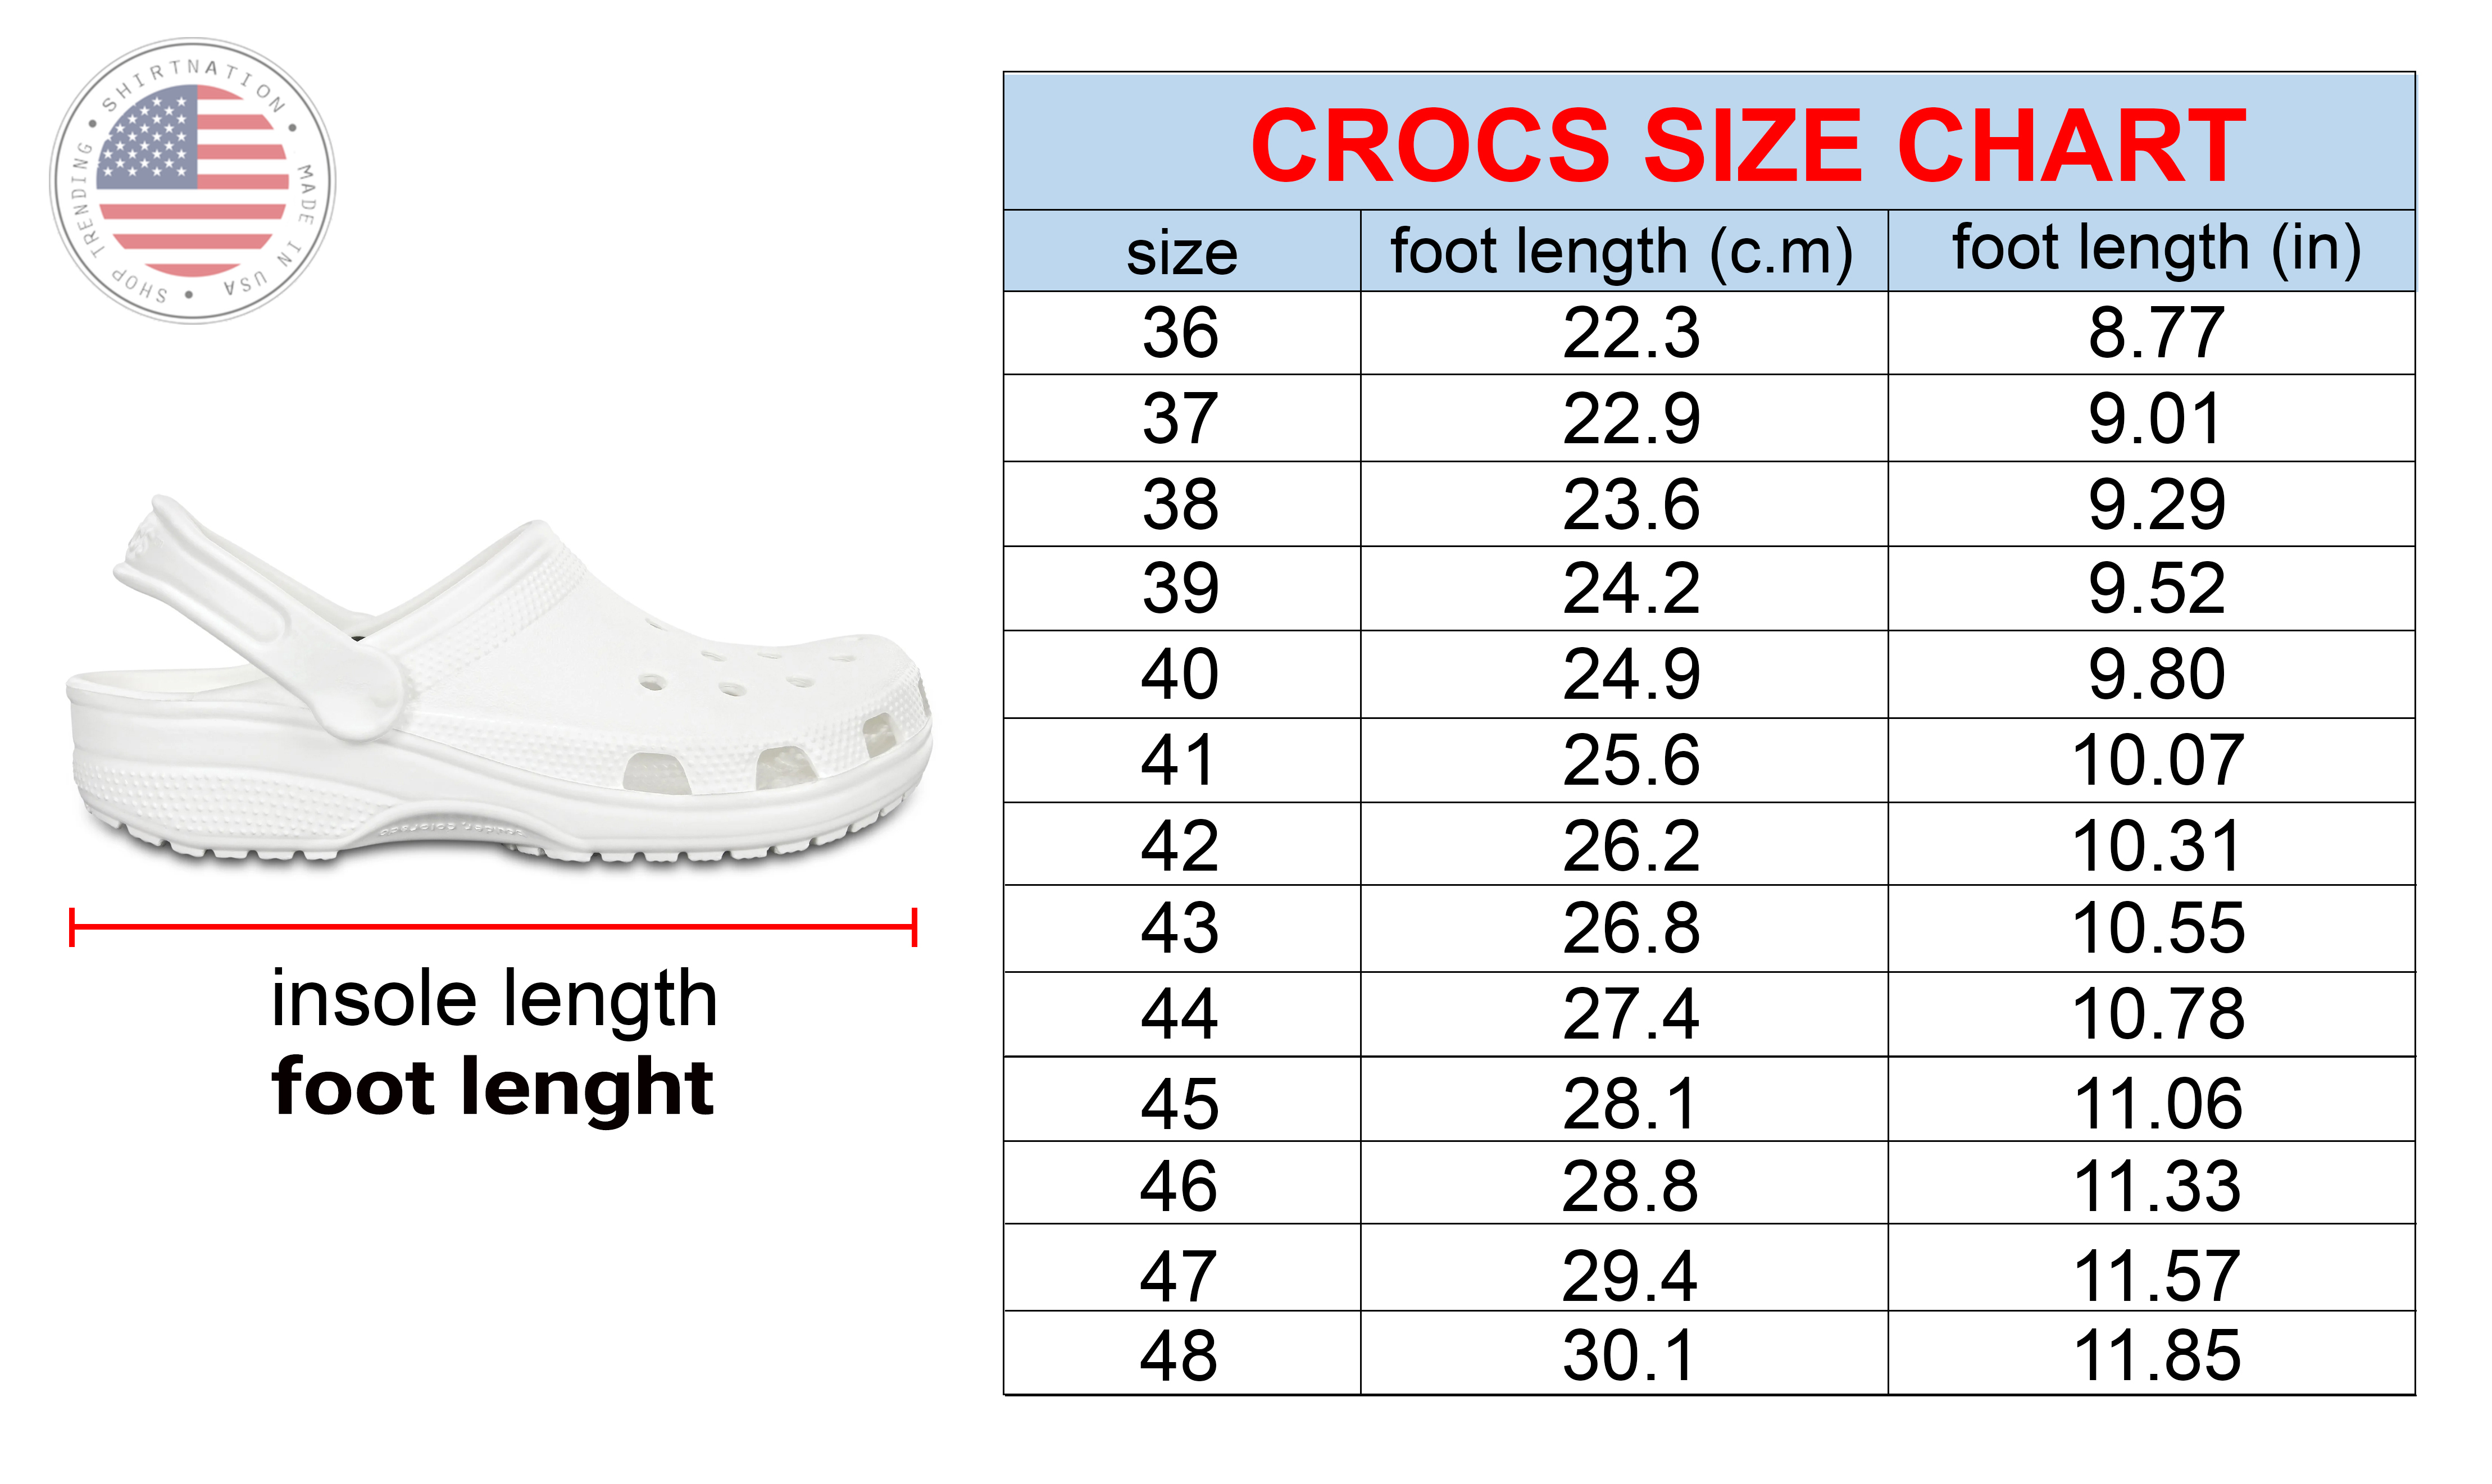 croc size chart Shirtnation